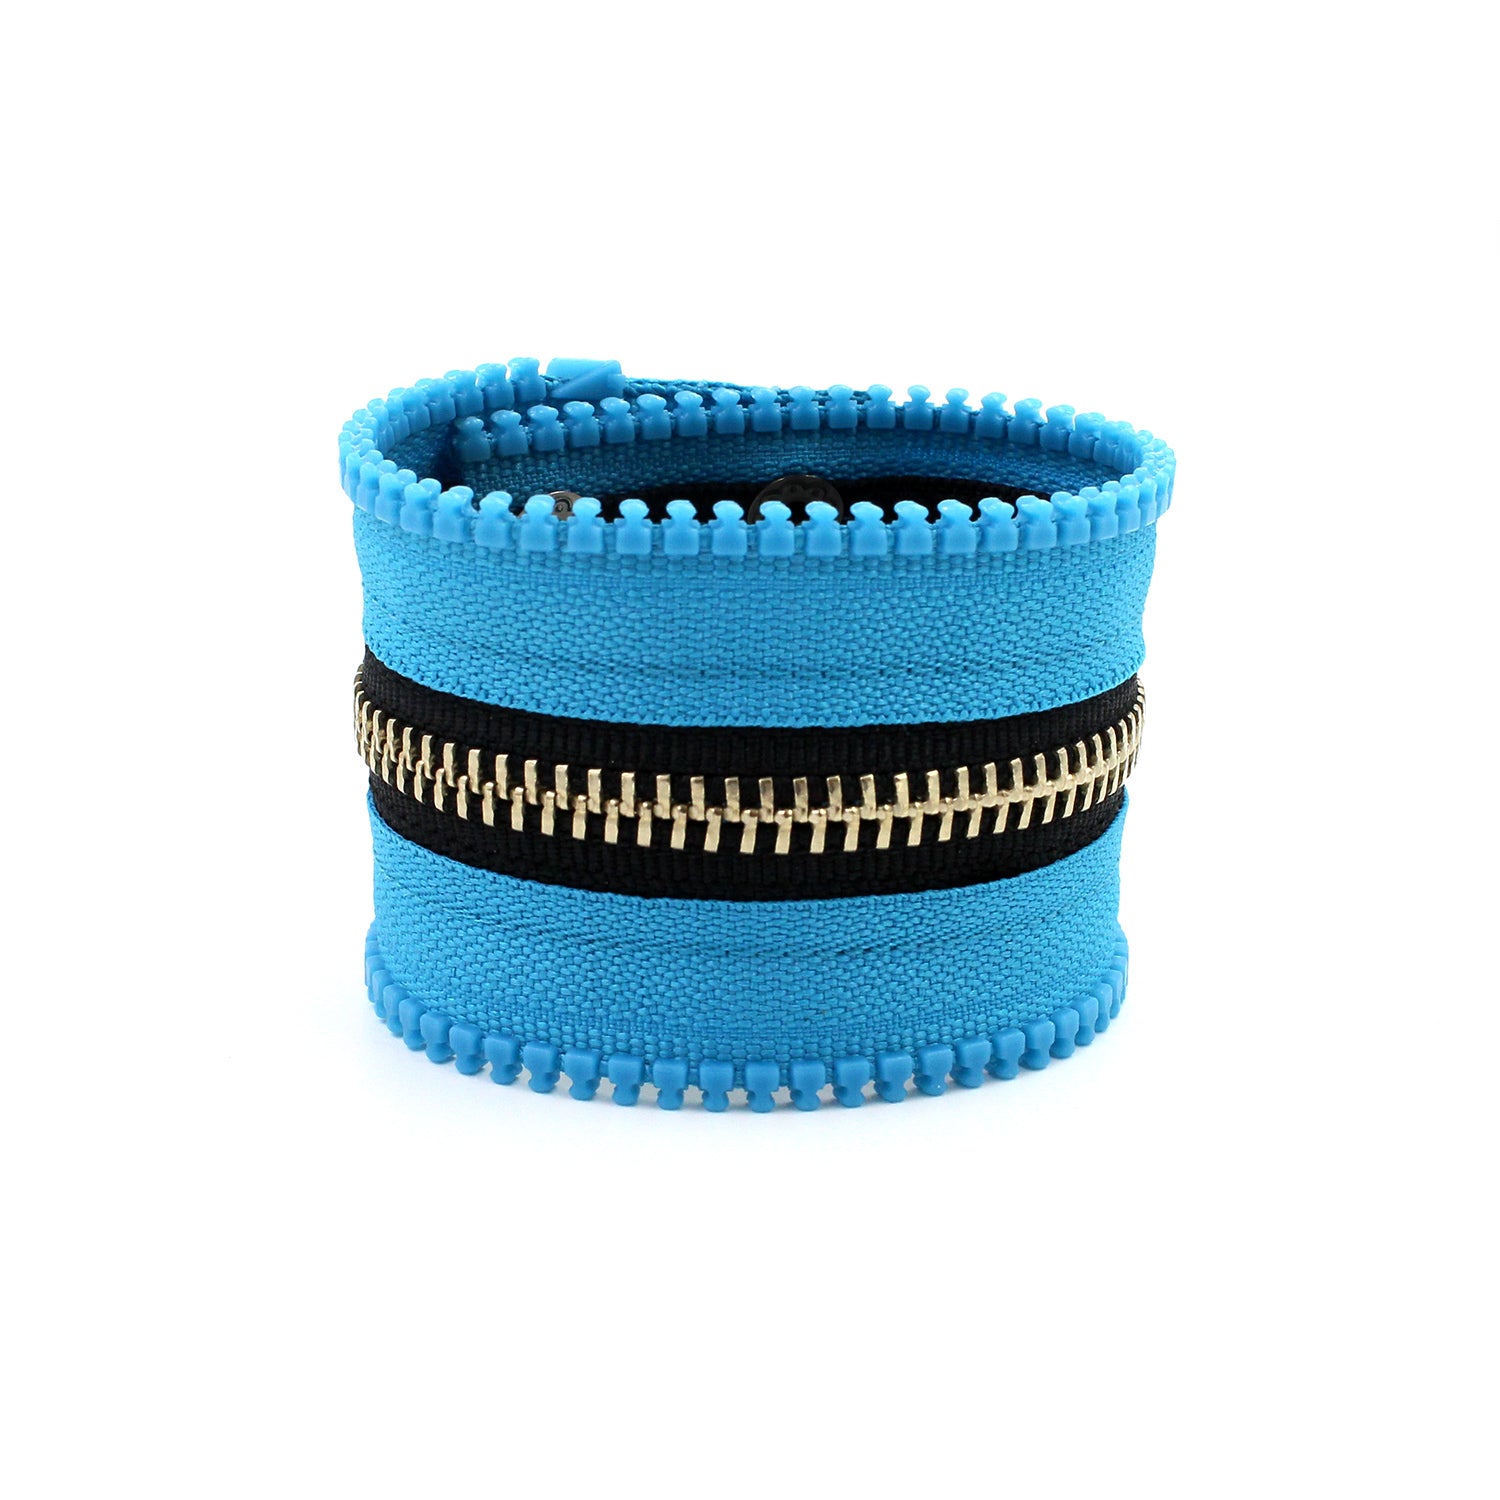 Working Blue Zip Bracelet